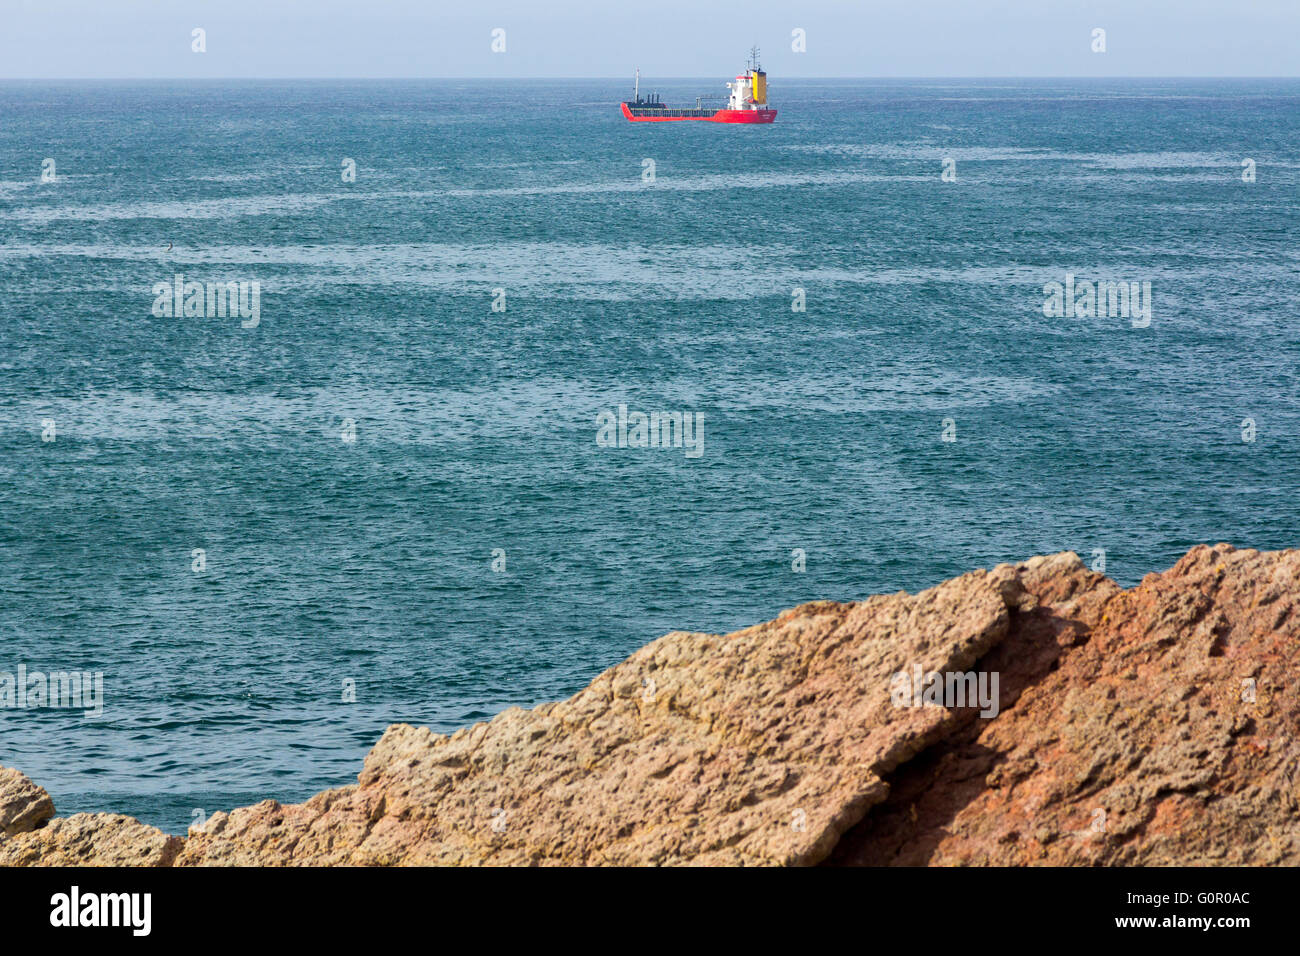 Merchant ship sailing by sea Stock Photo